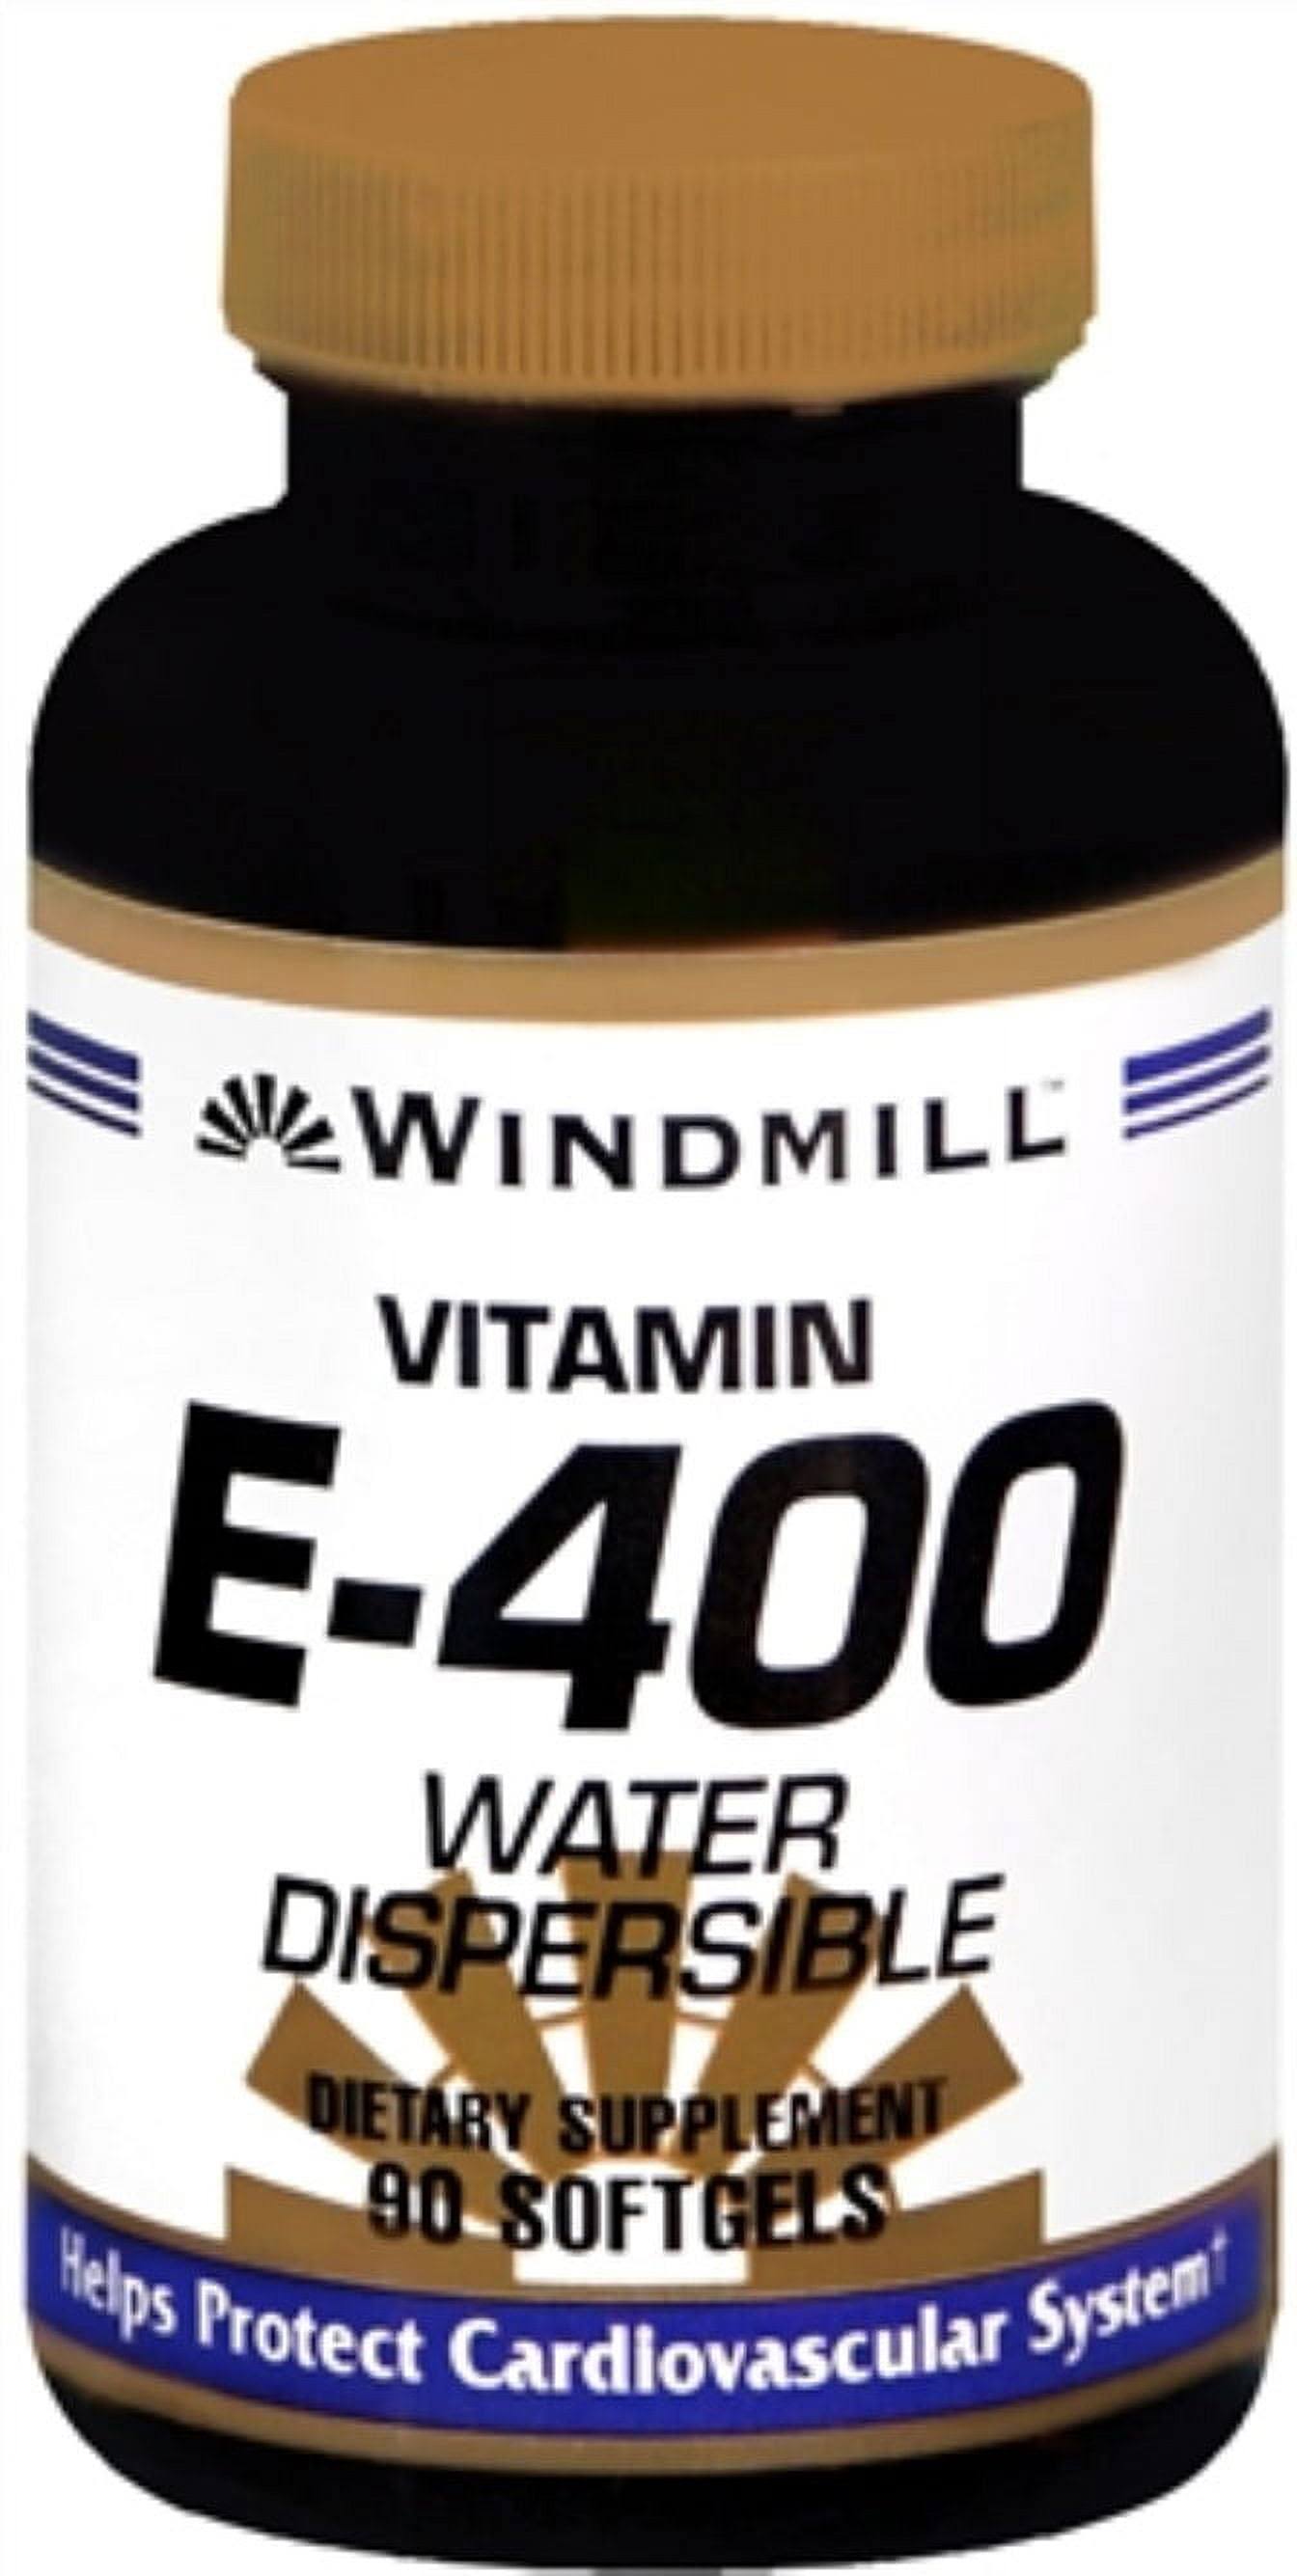 Windmill Vitamin E-400 Supplement - Water Dispersible, 90 Softgels